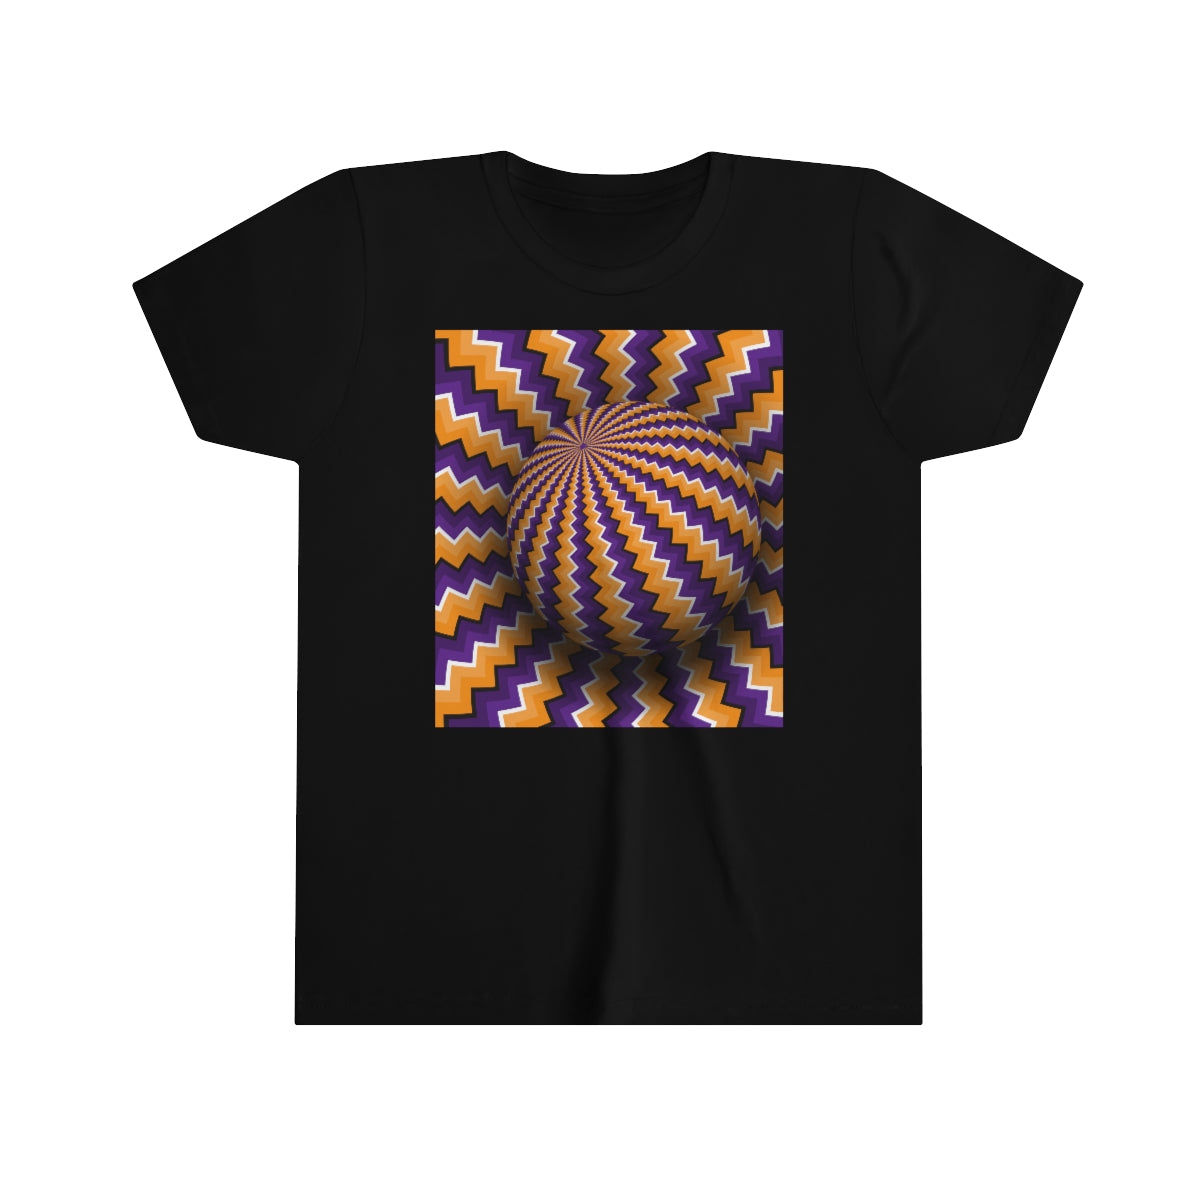 Youth Short Sleeve Tee "Optical illusion Purple sphere"